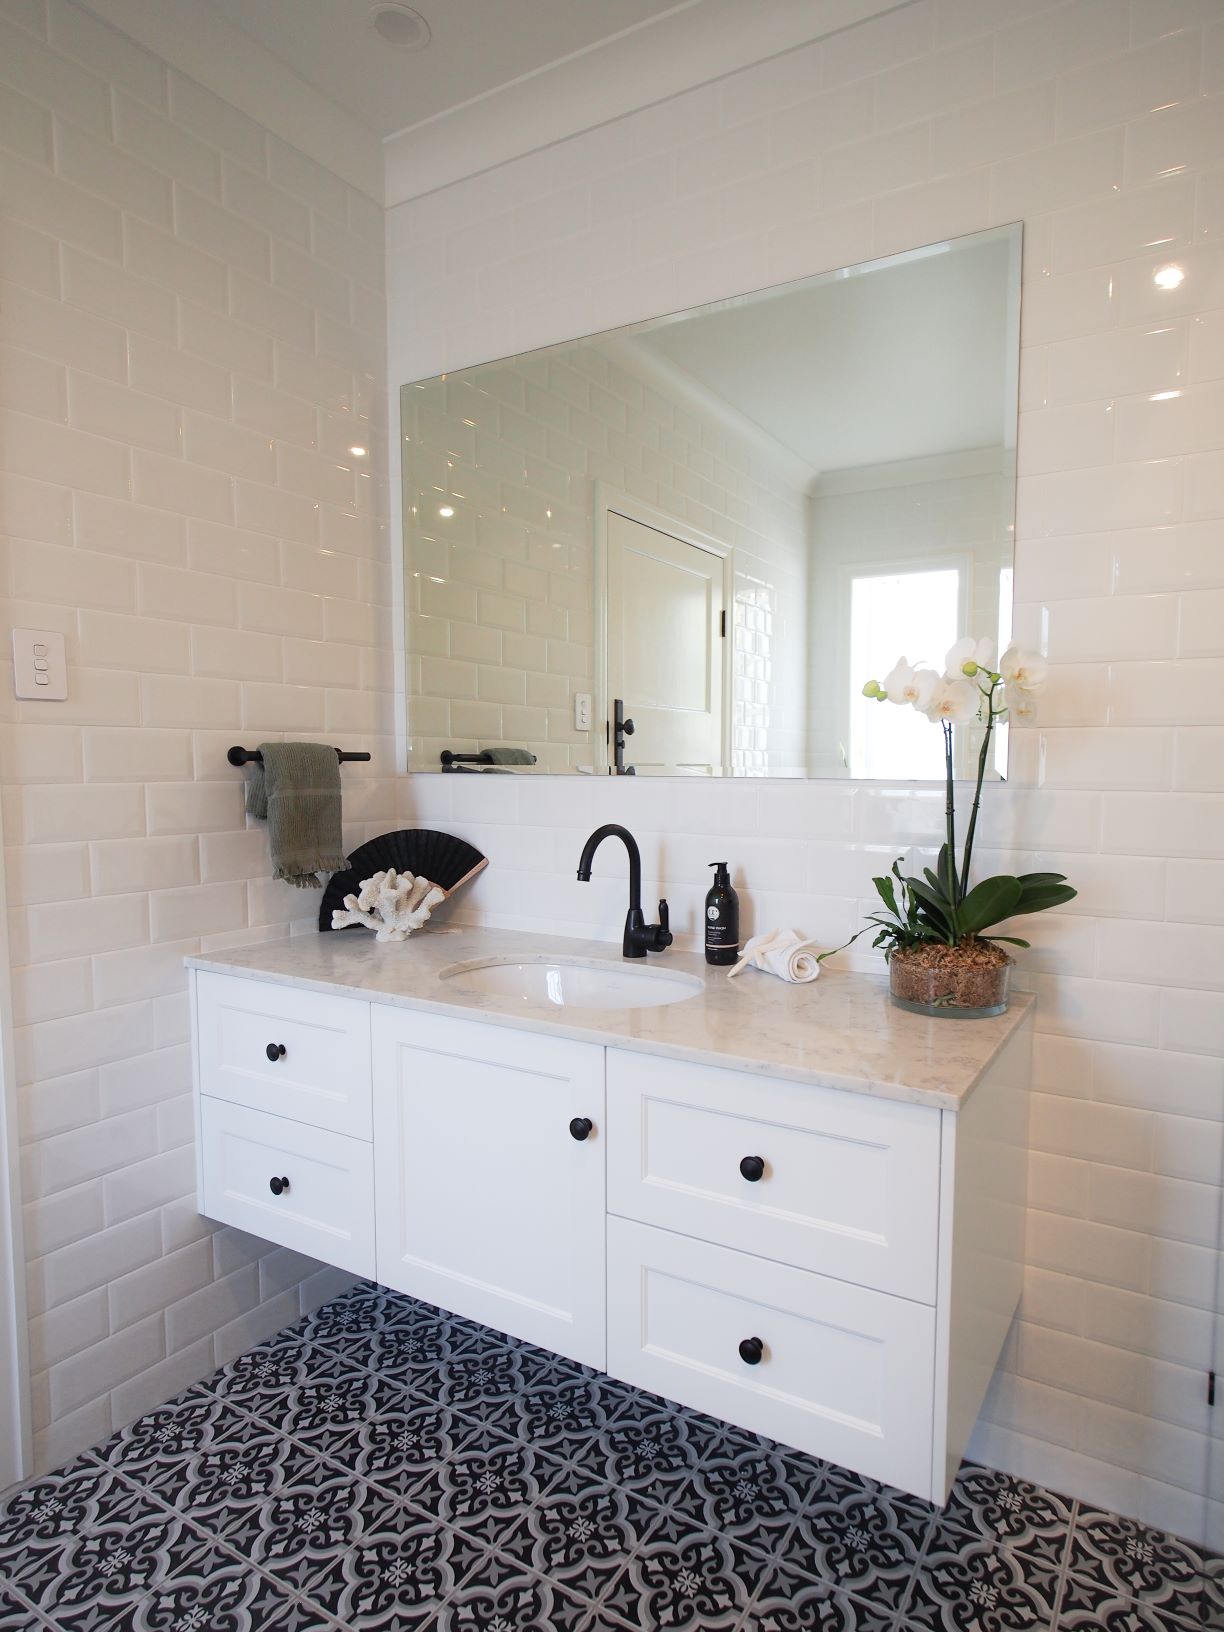 ascot main bathroom vanity black tapware black and white floor tiles white wall tiles